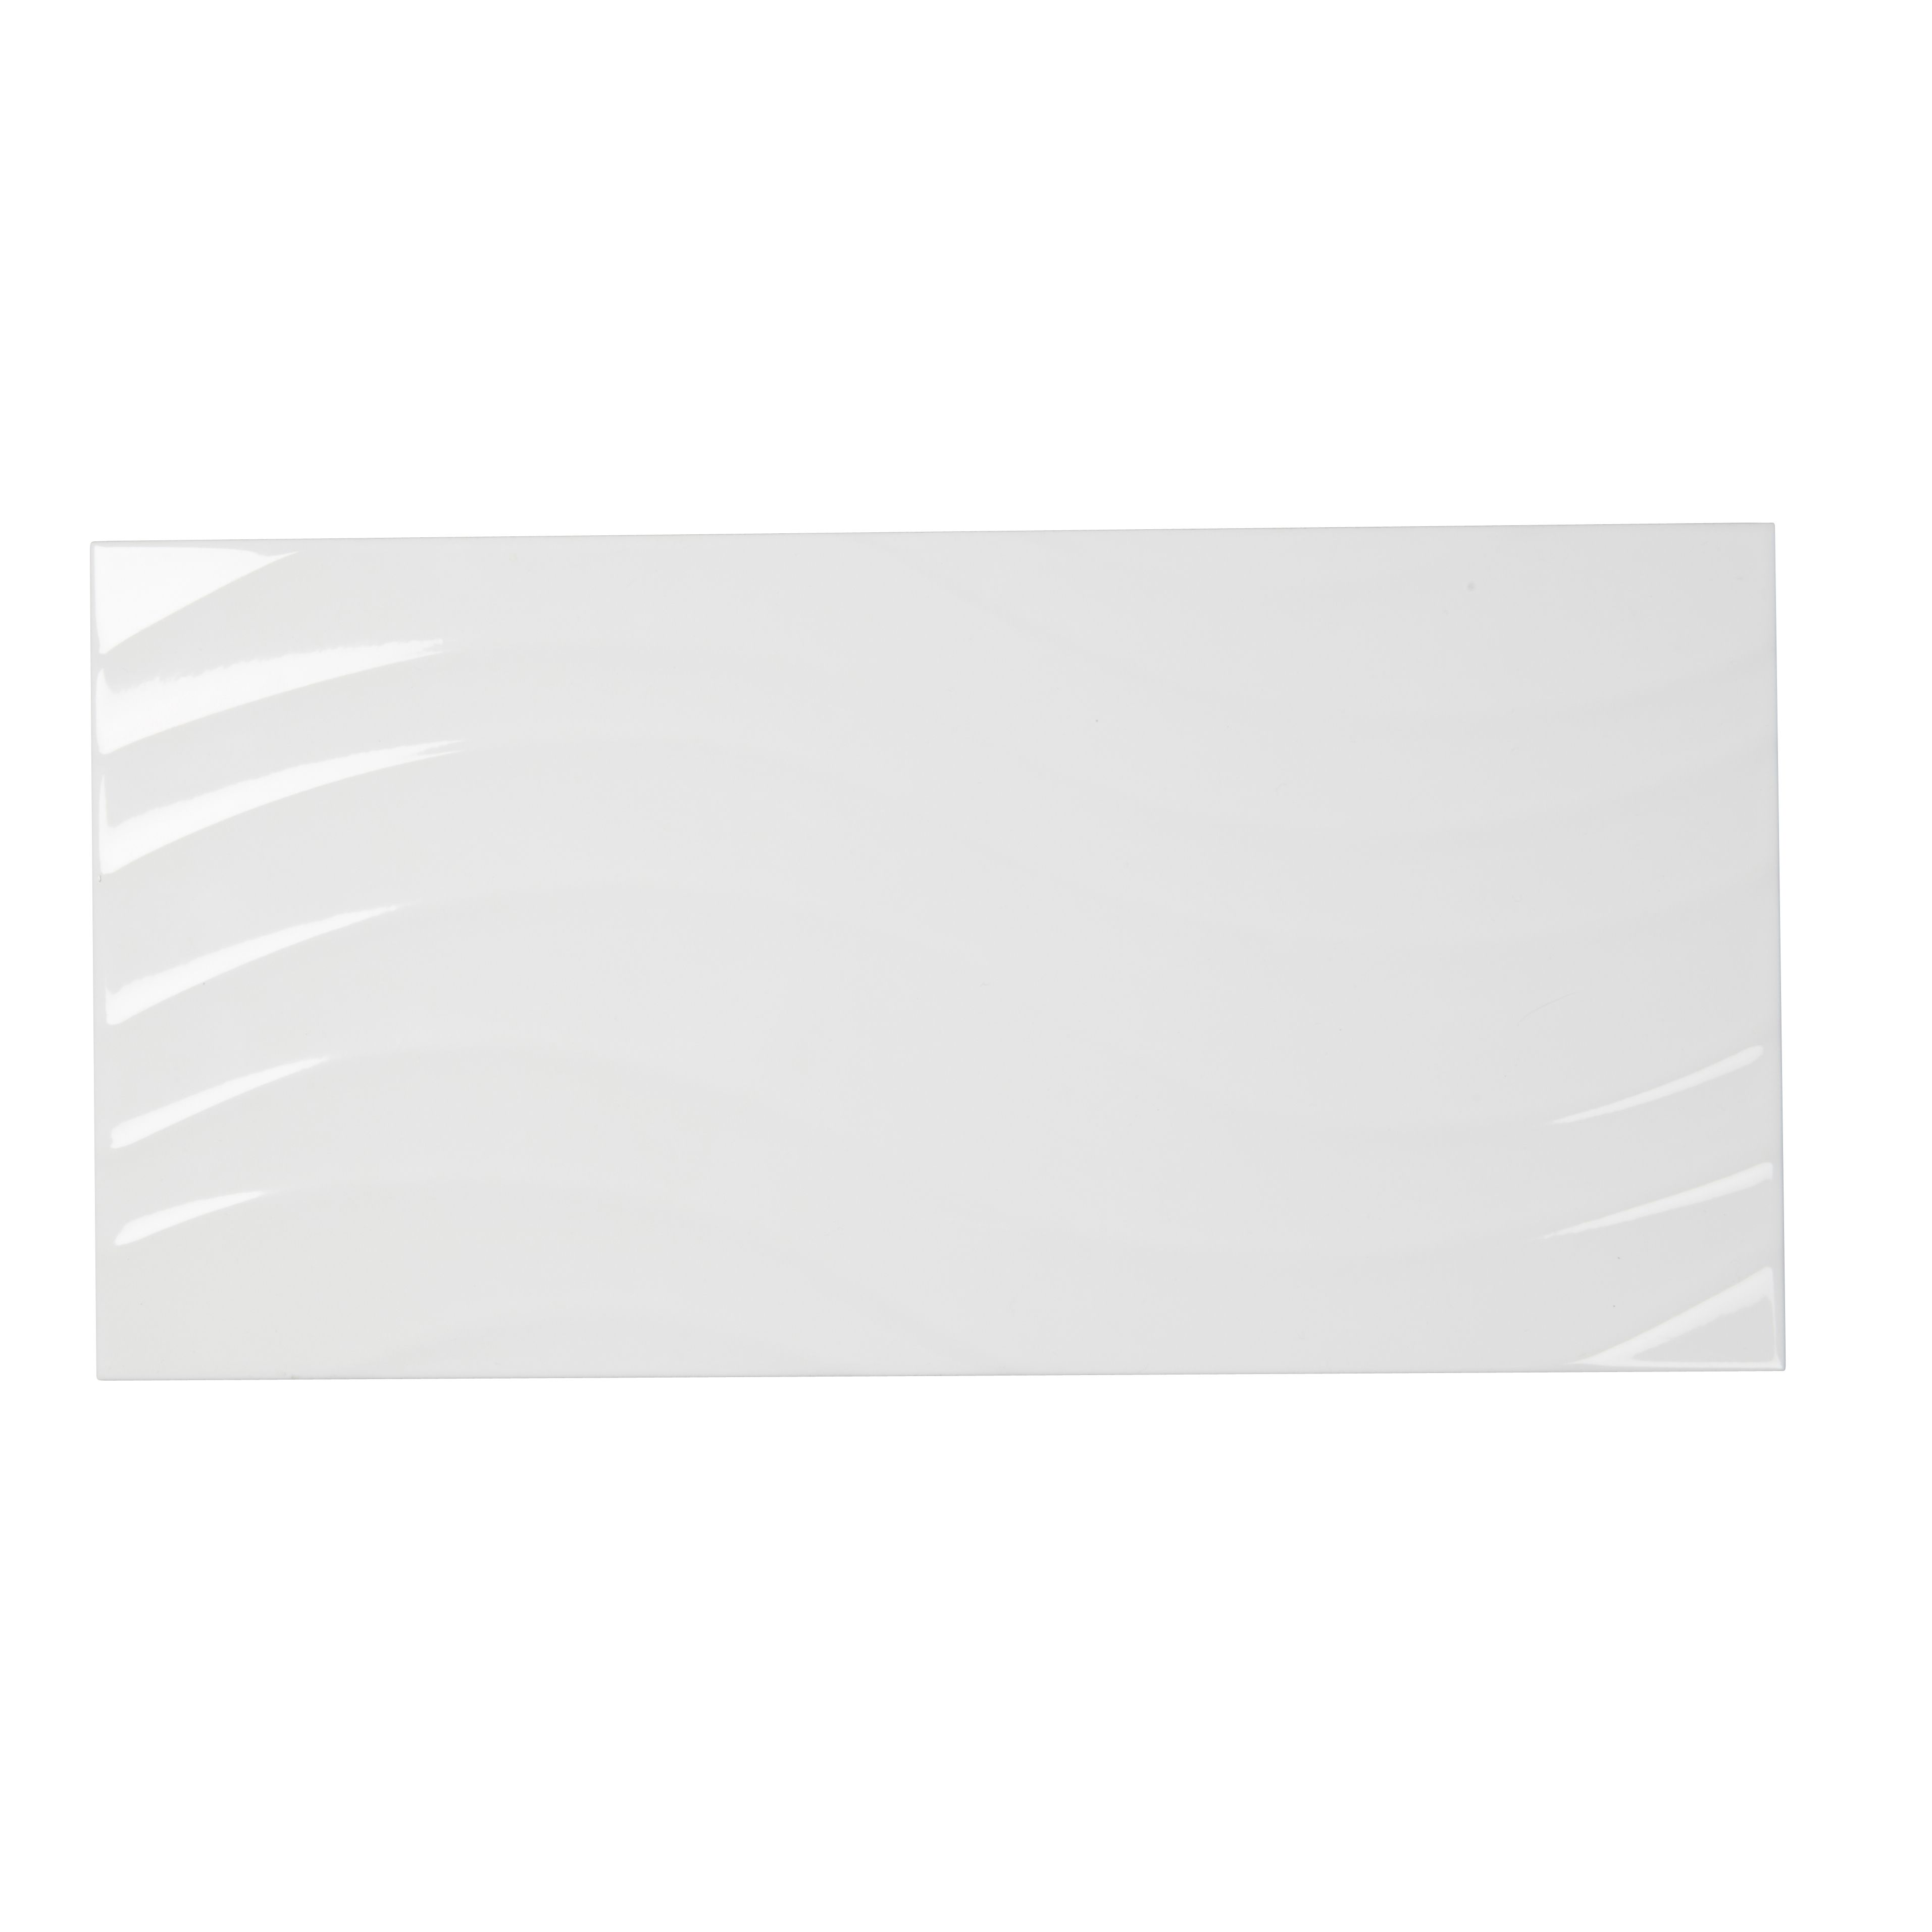 Catanzaro White Wave Ceramic Wall tile, 1, Sample